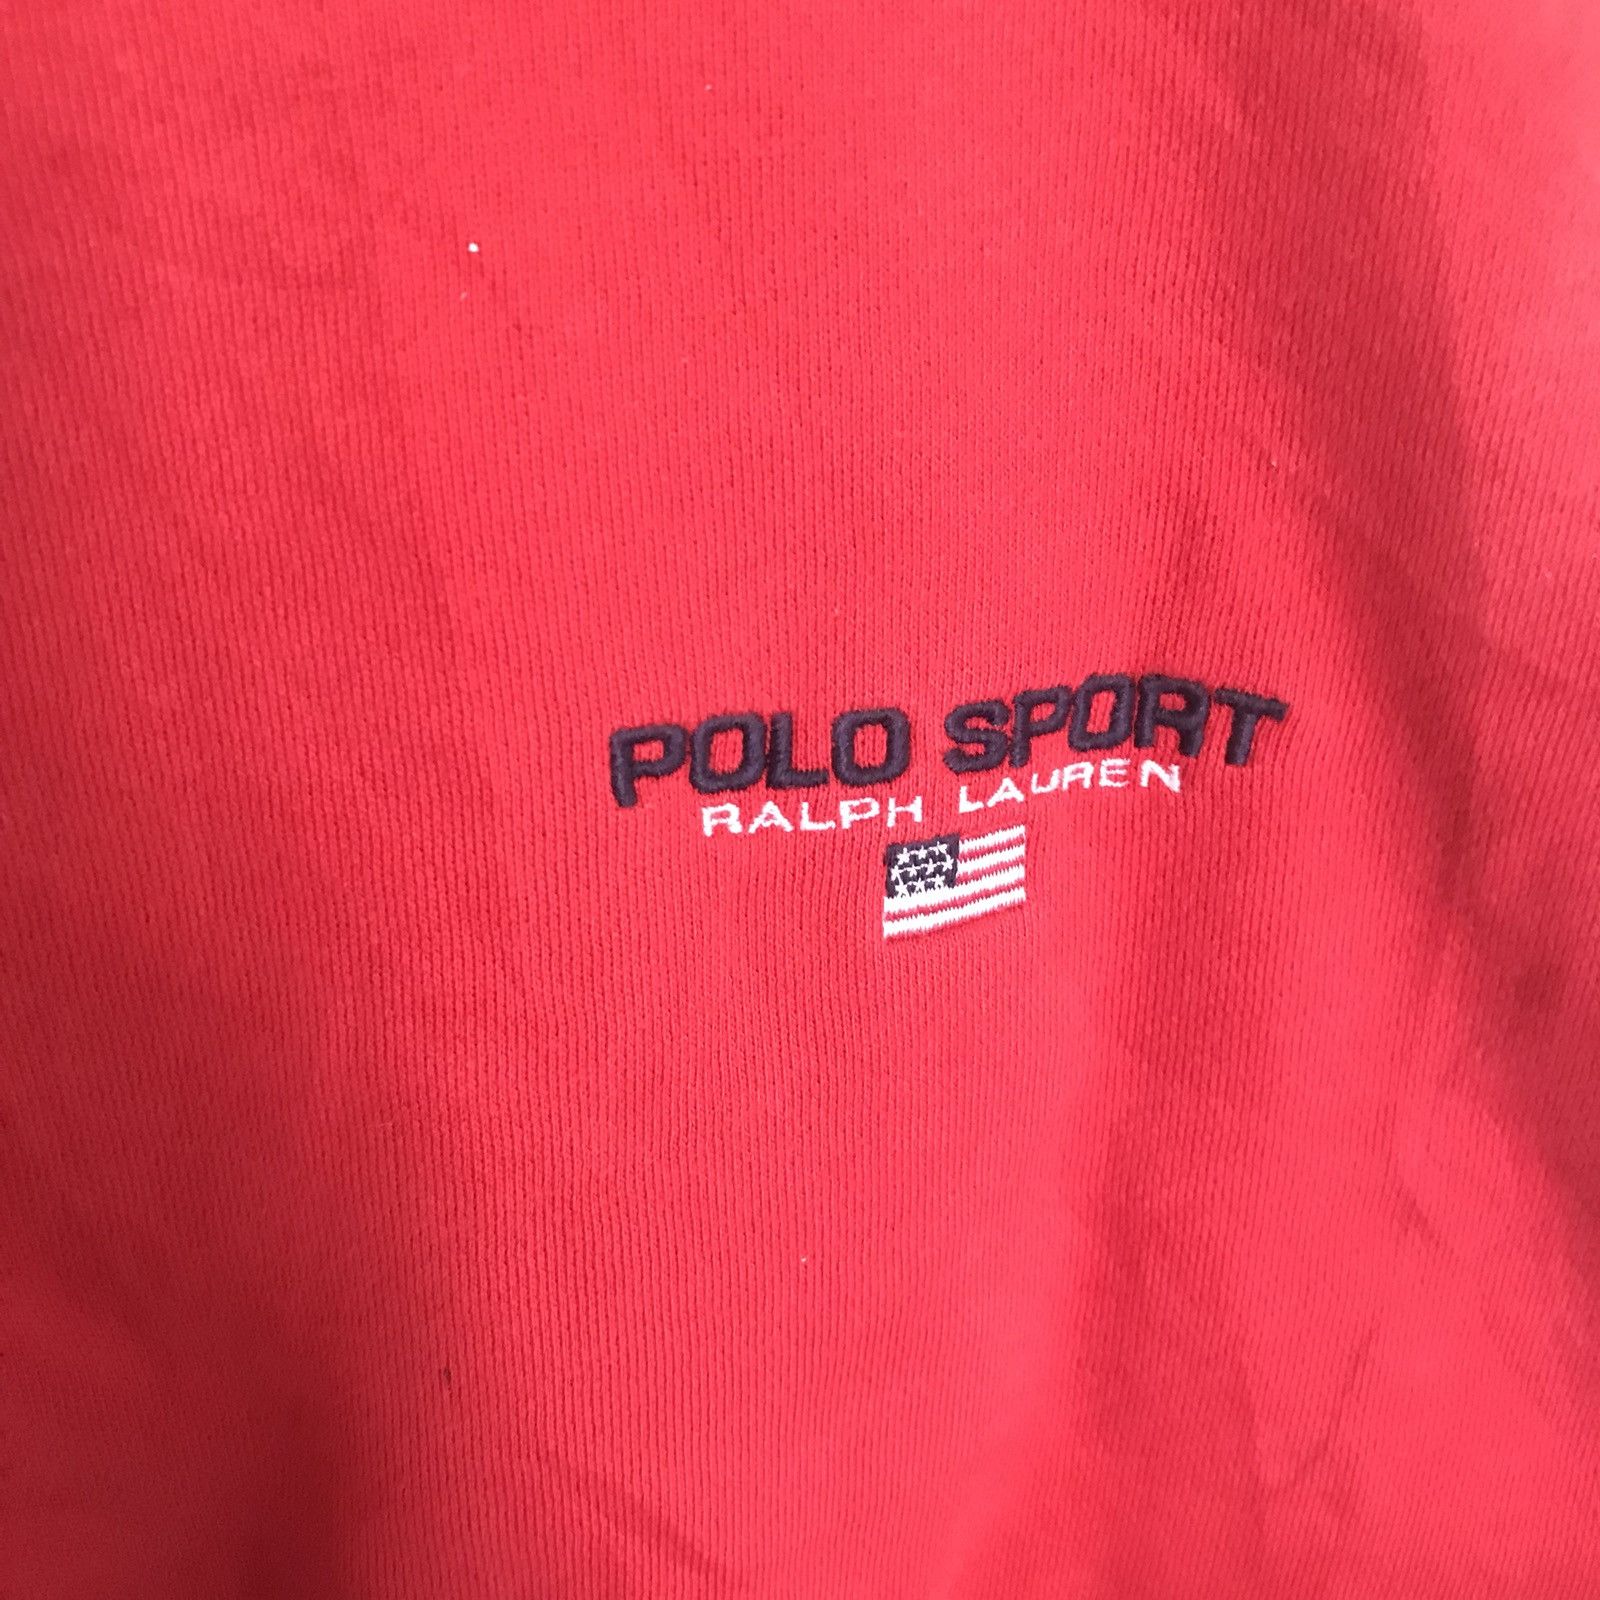 Polo Ralph Lauren - Vintage 90s Polo sport ralph lauren sweatshirt spell out Size M/L stadium snow beach 1992 1993 - 3